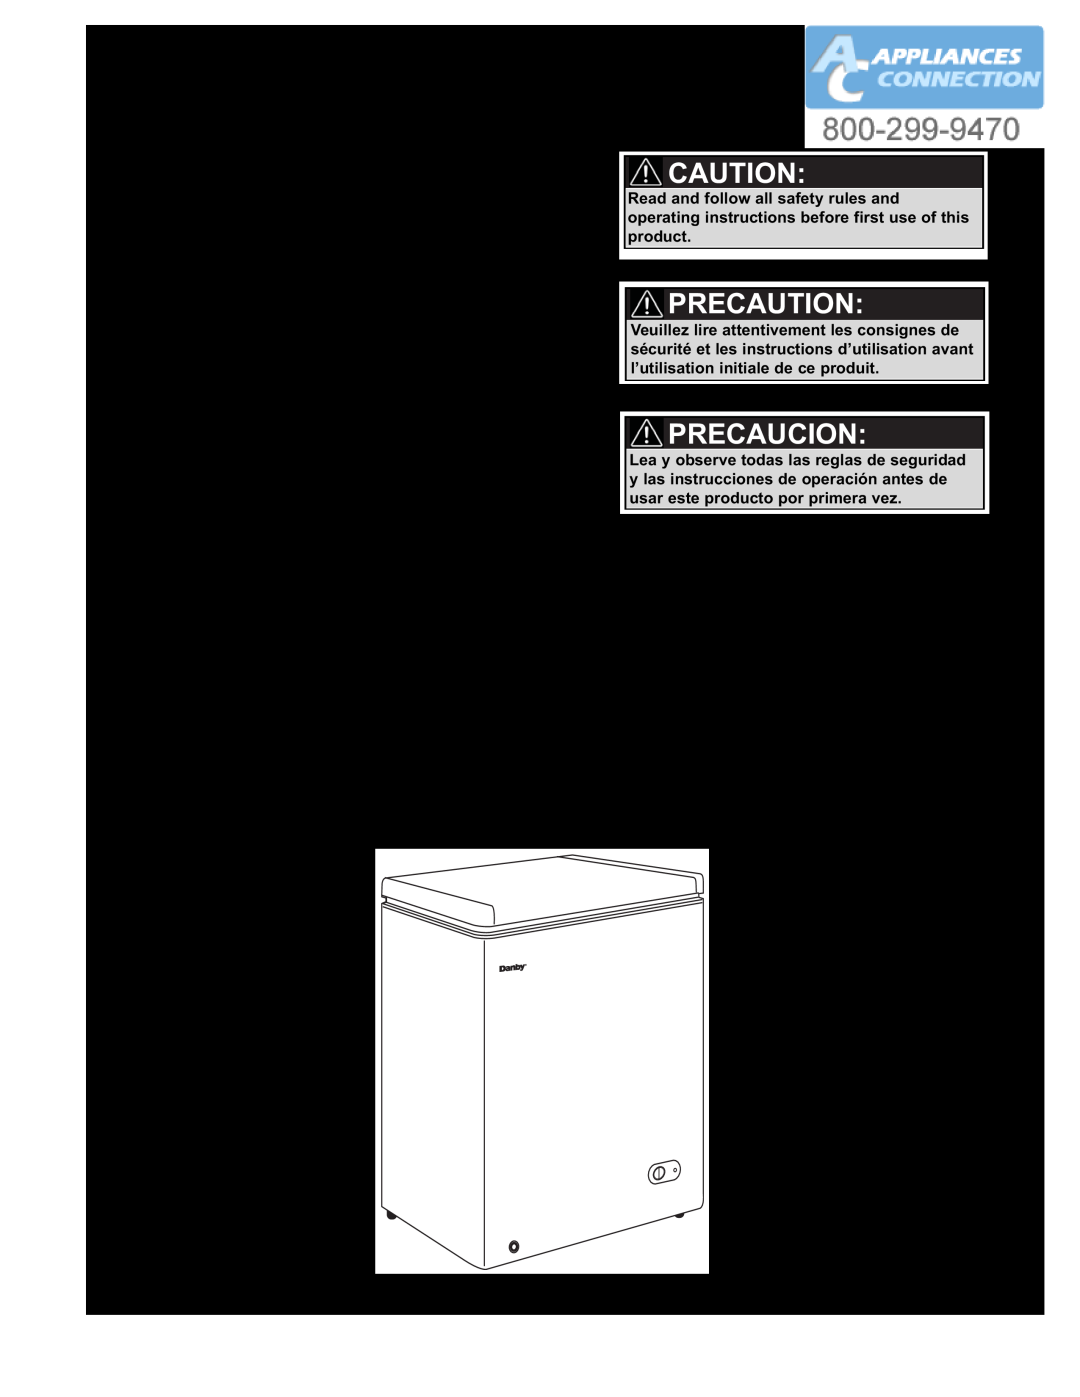 Danby DCF550W1 manual Contents, Precaution, Precaucion, Compact Chest Freezer, Owner’s Use and Care Guide, 8-14 